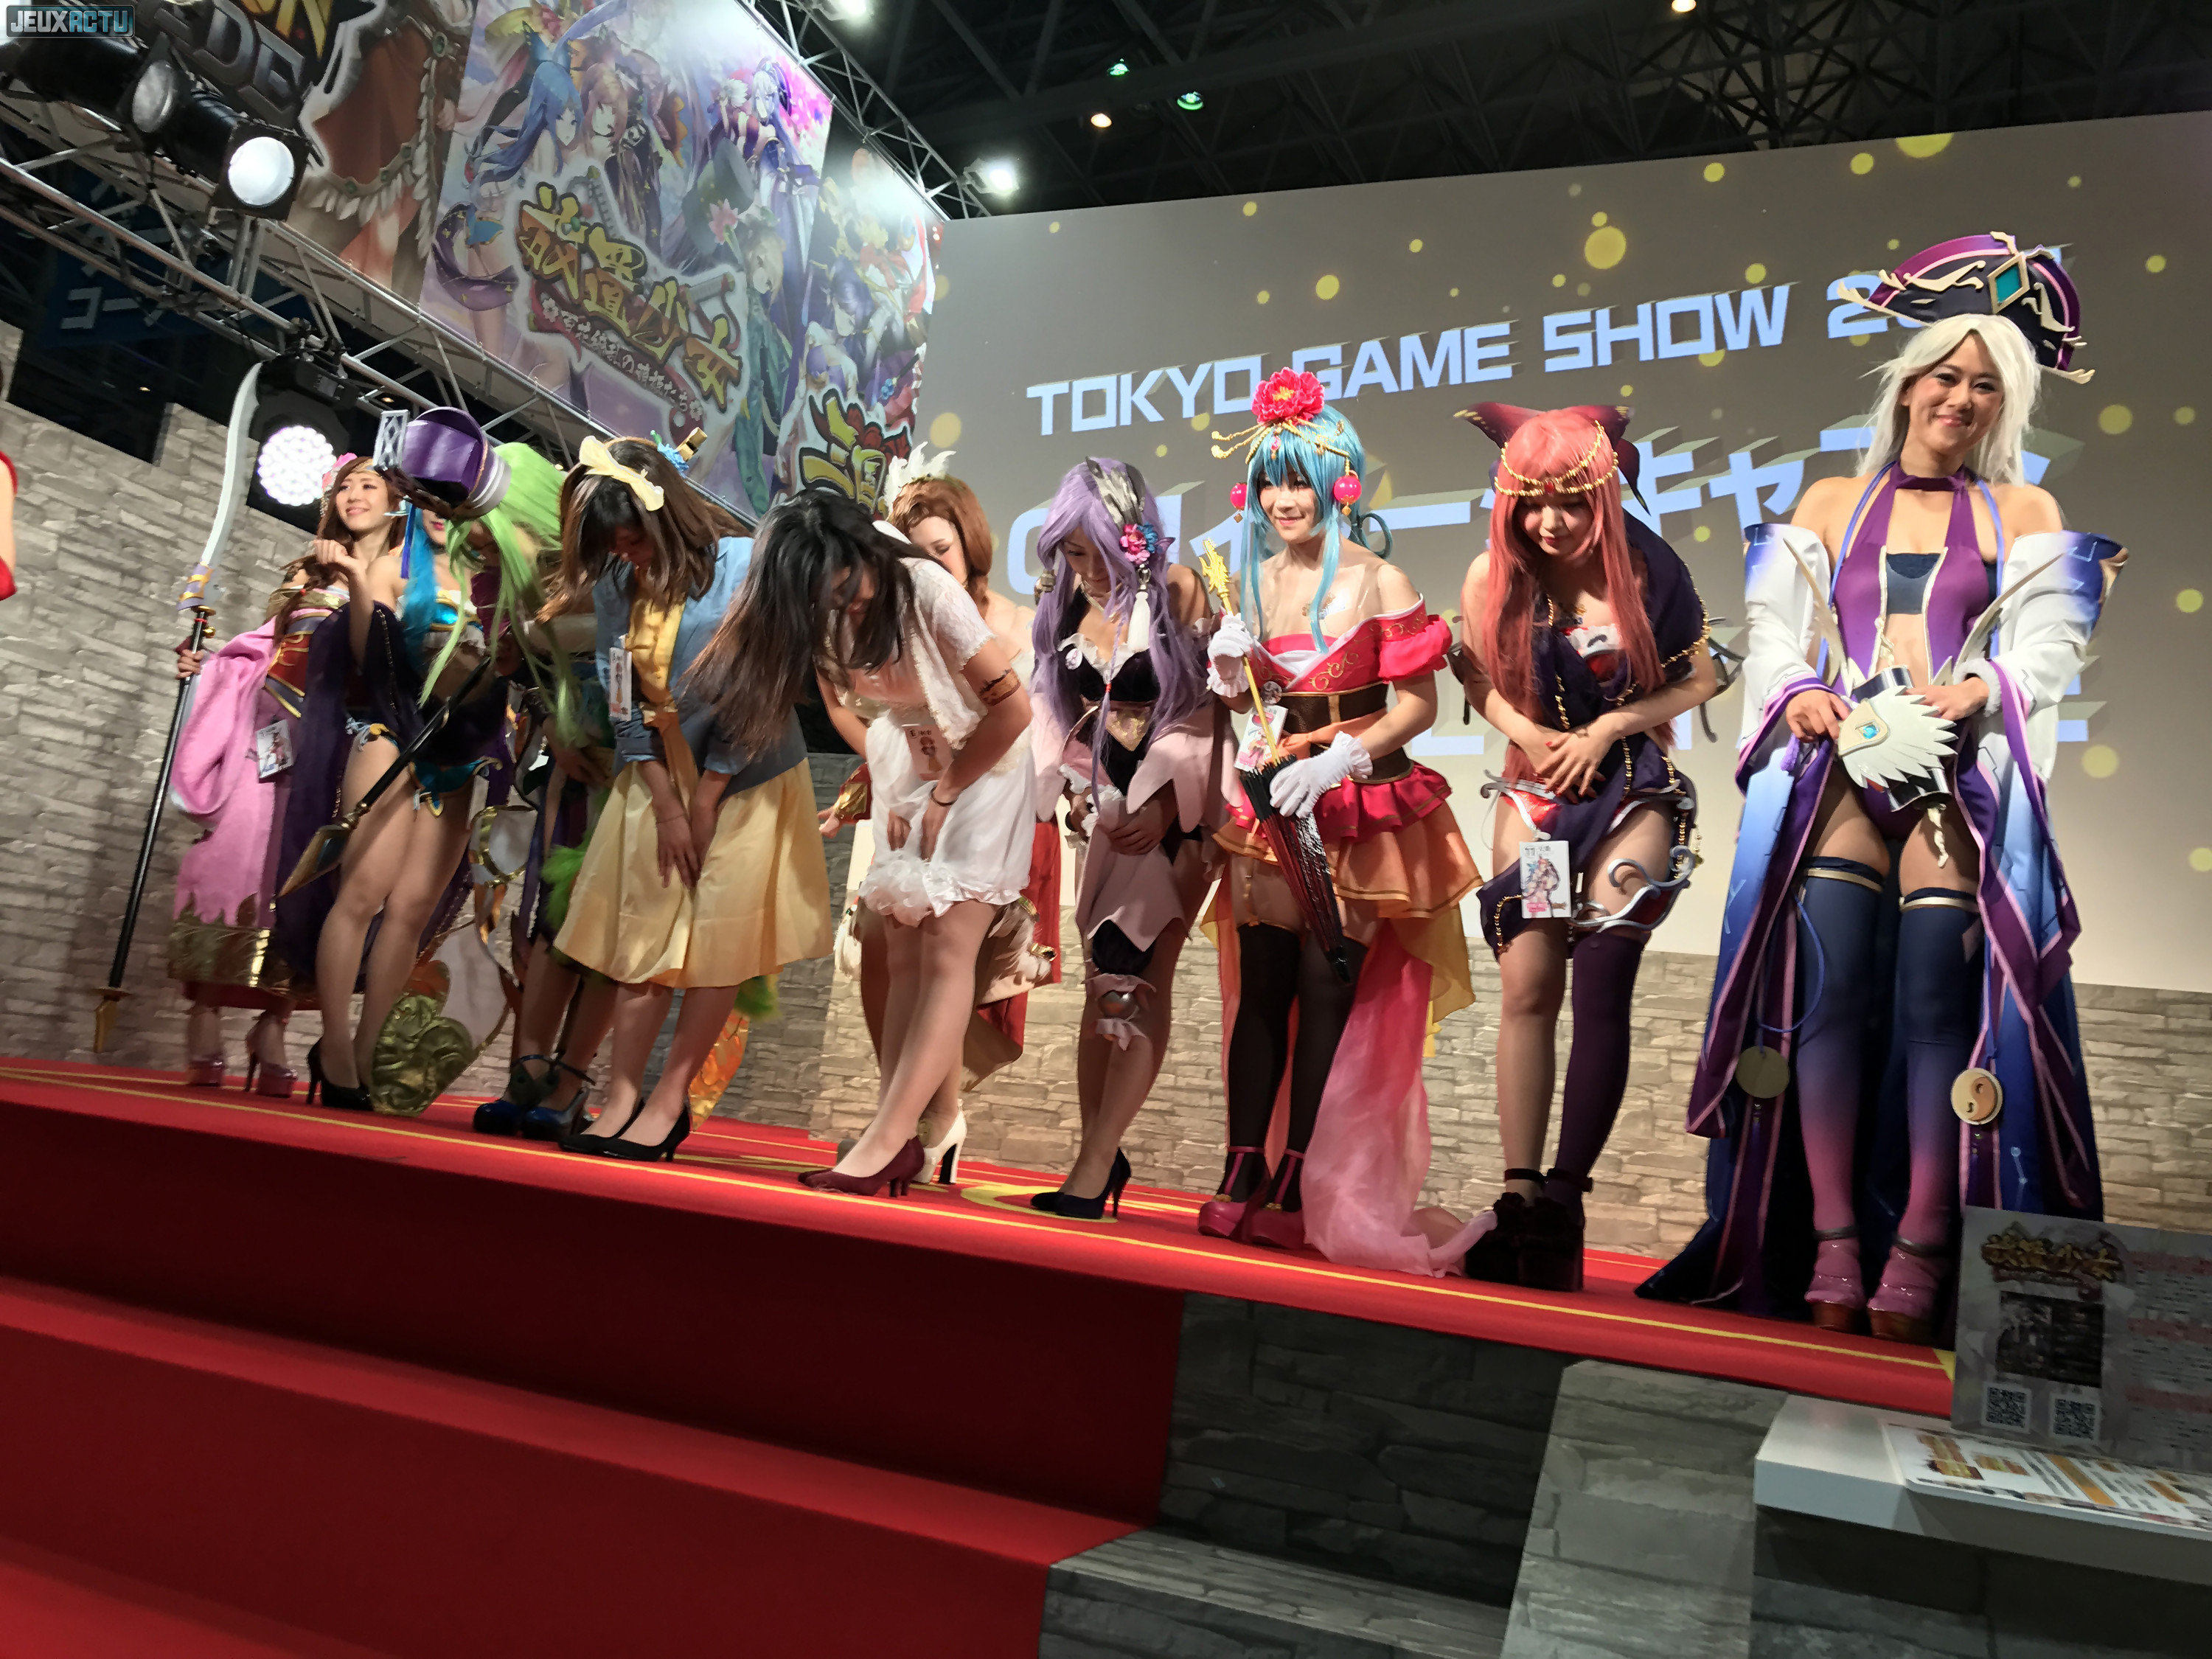 A game show is. Токио гейм шоу. Exhibition игра. Game photo выставка.